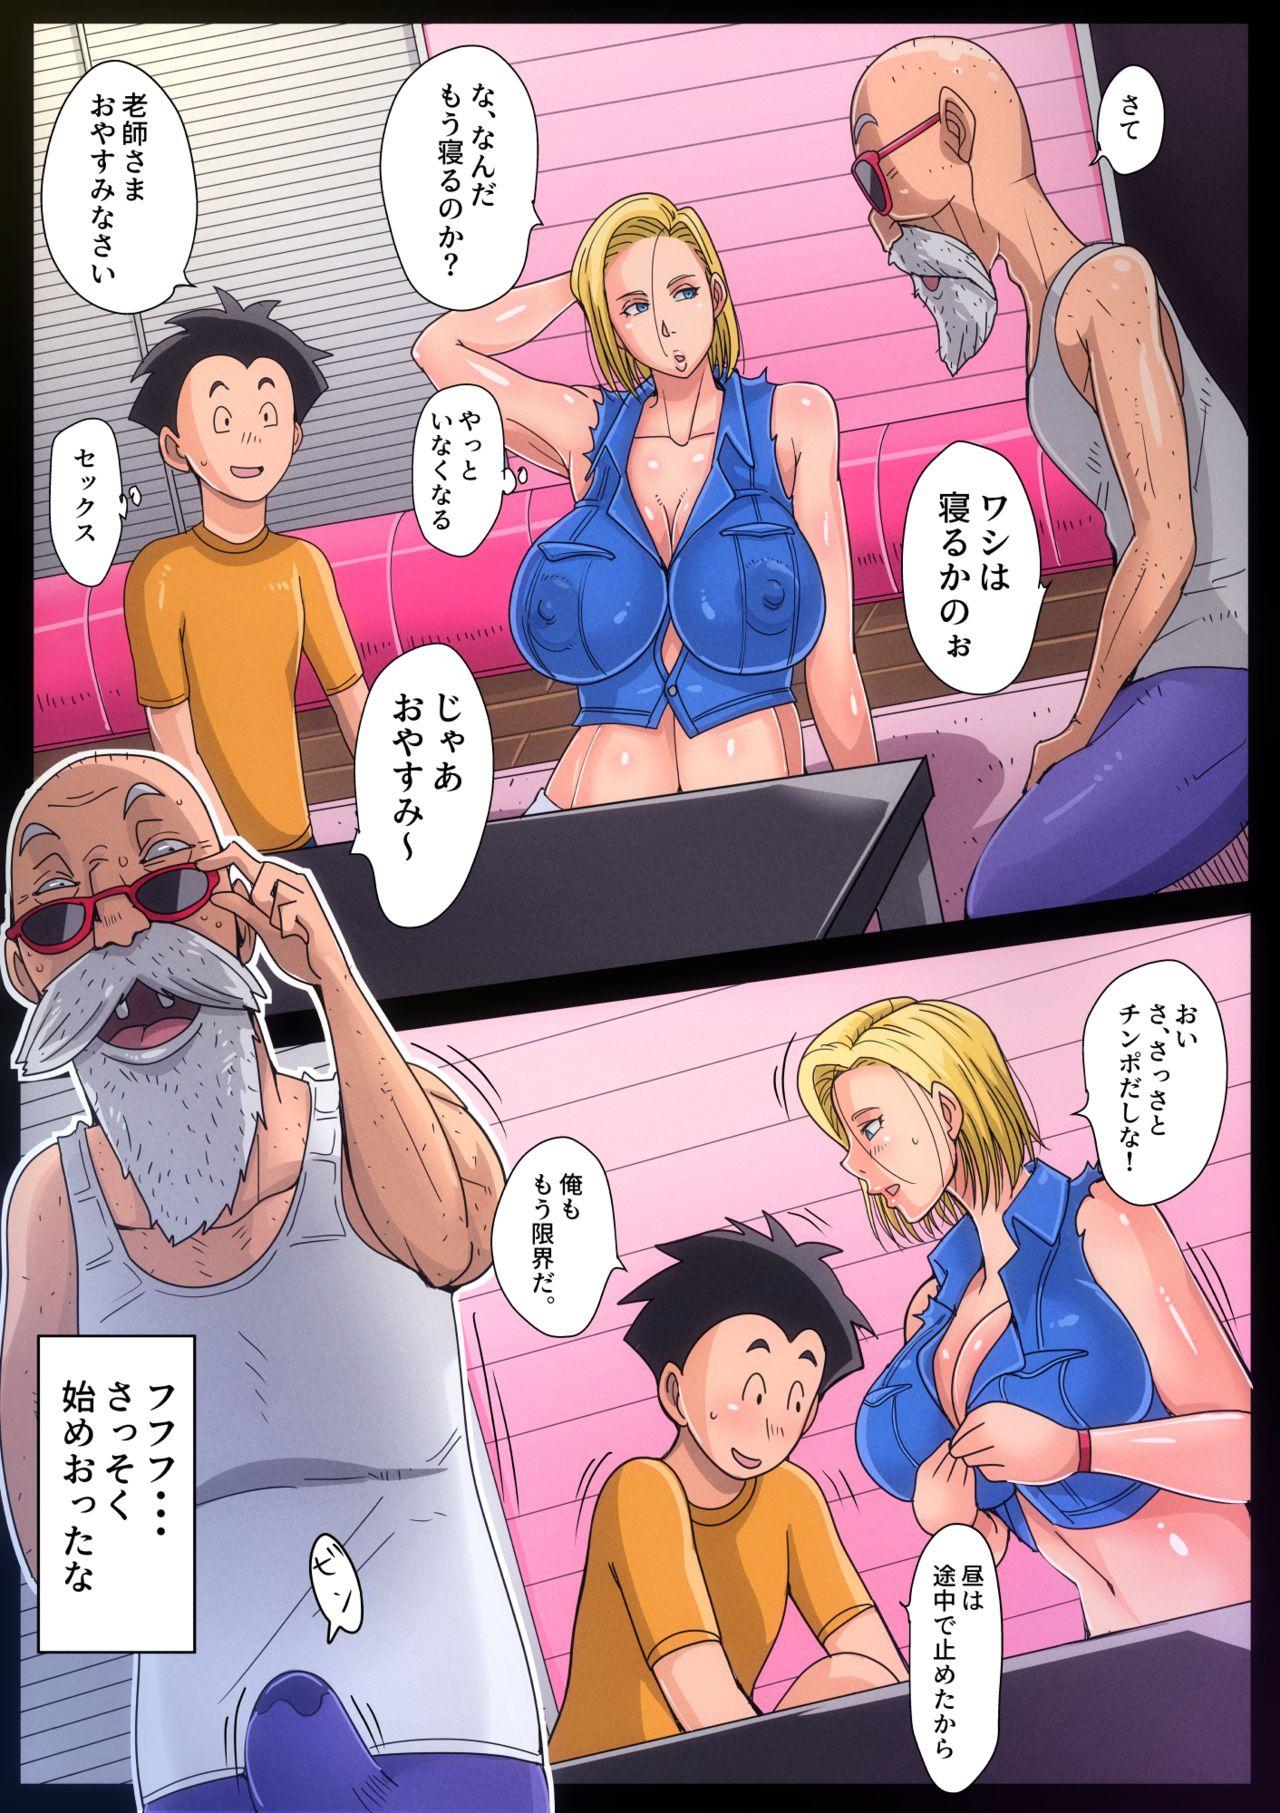 Lesbiansex B-Kyuu Manga 10 - Dragon ball z Nylons - Page 3